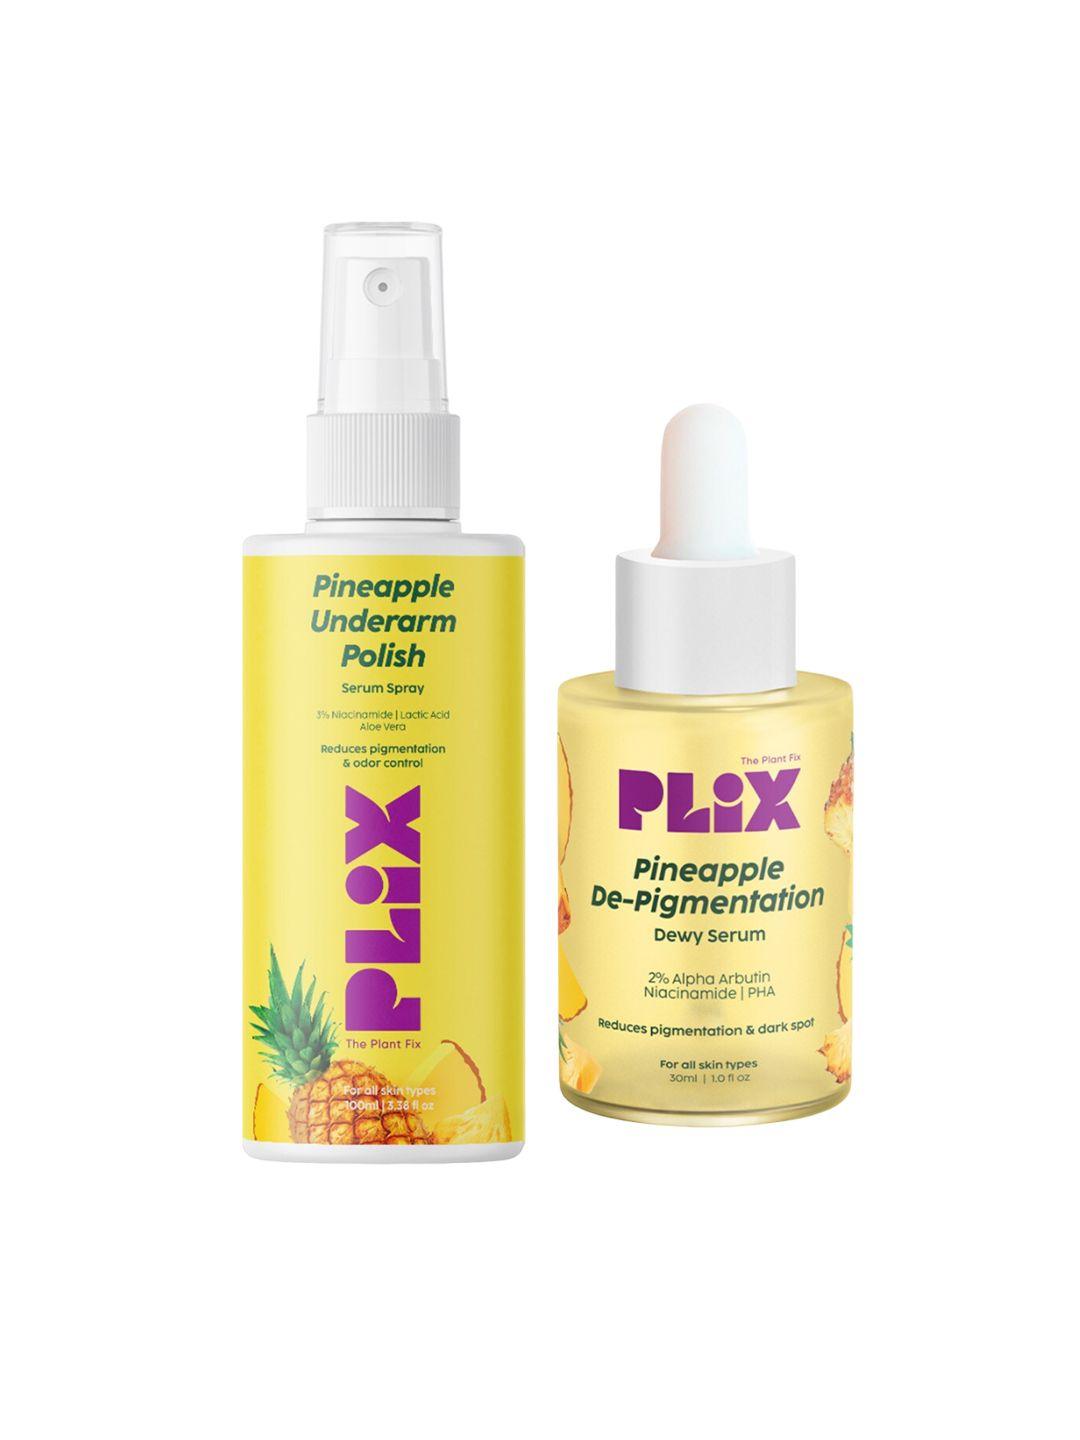 plix the plant fix pineapple underarm serum spray for dark underarms & depigmentation 30ml